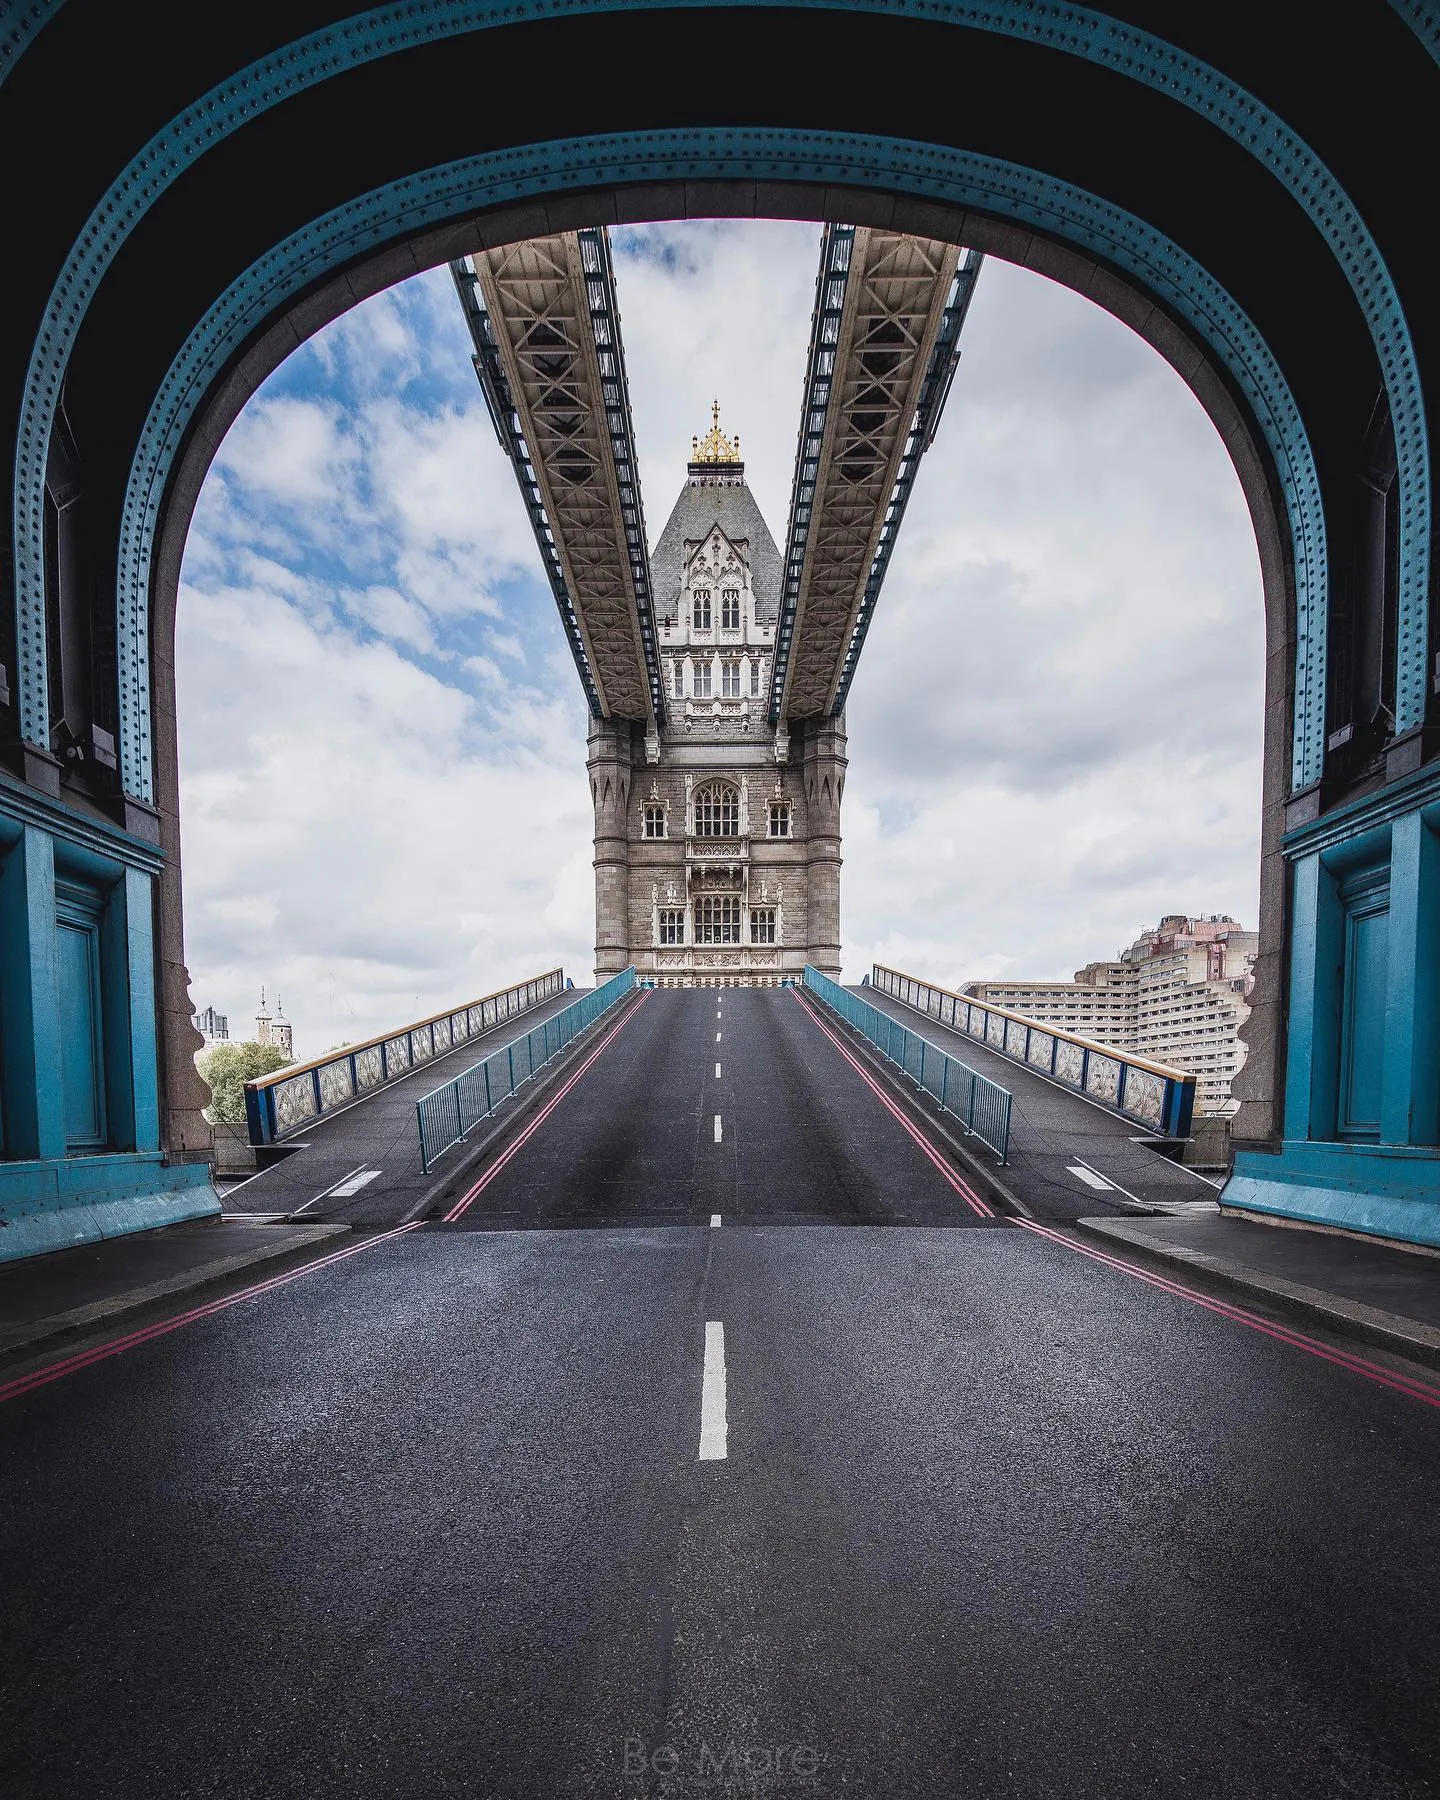 VISIT LONDON - A different take on #towerbridge